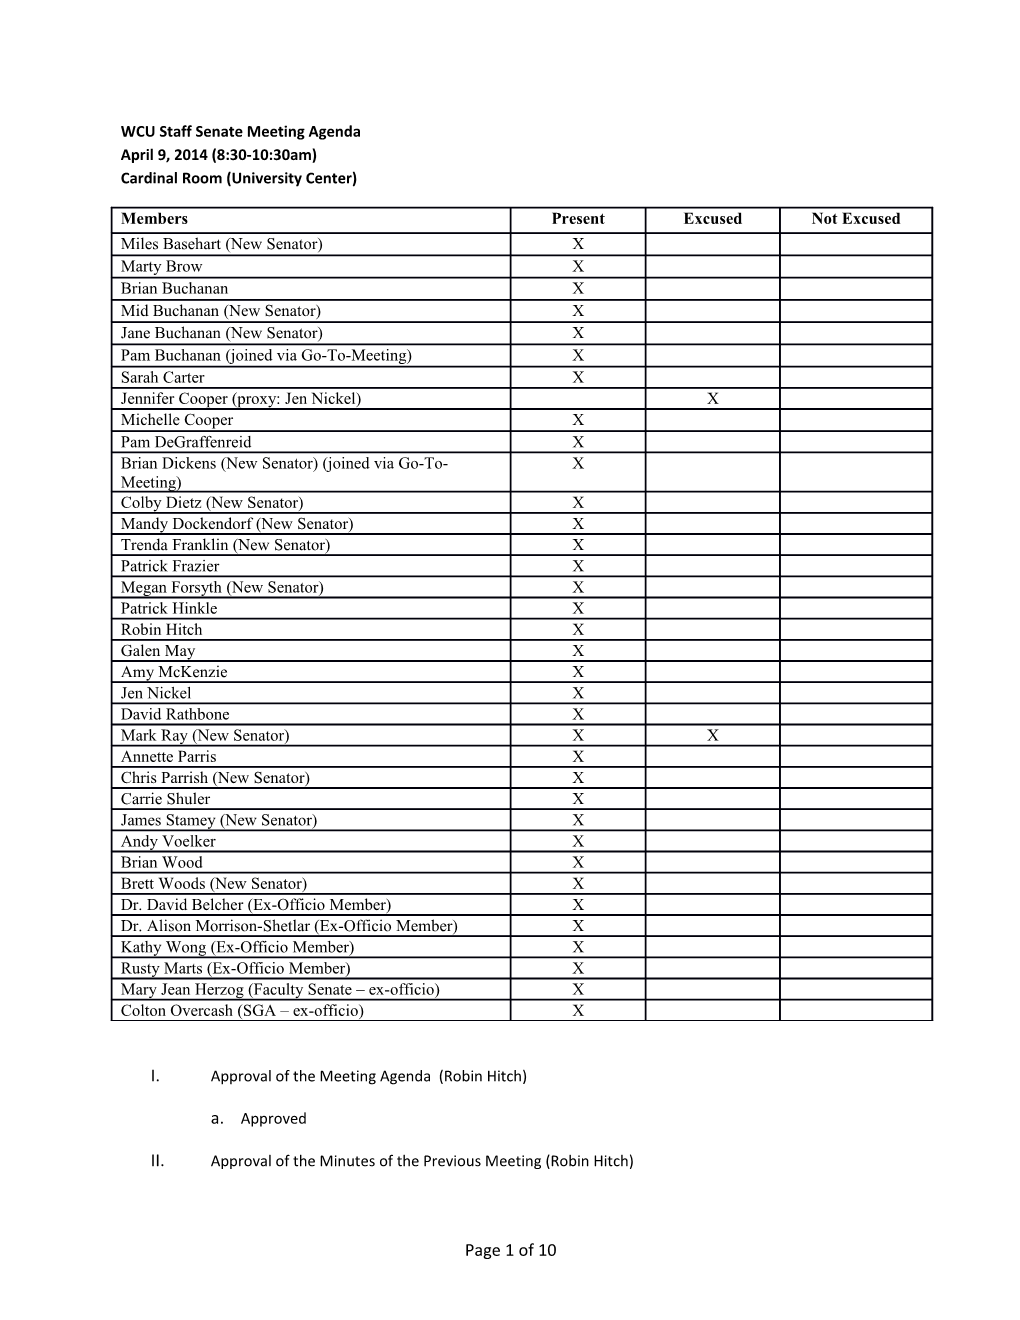 Staff Senate Minutes - April 2014